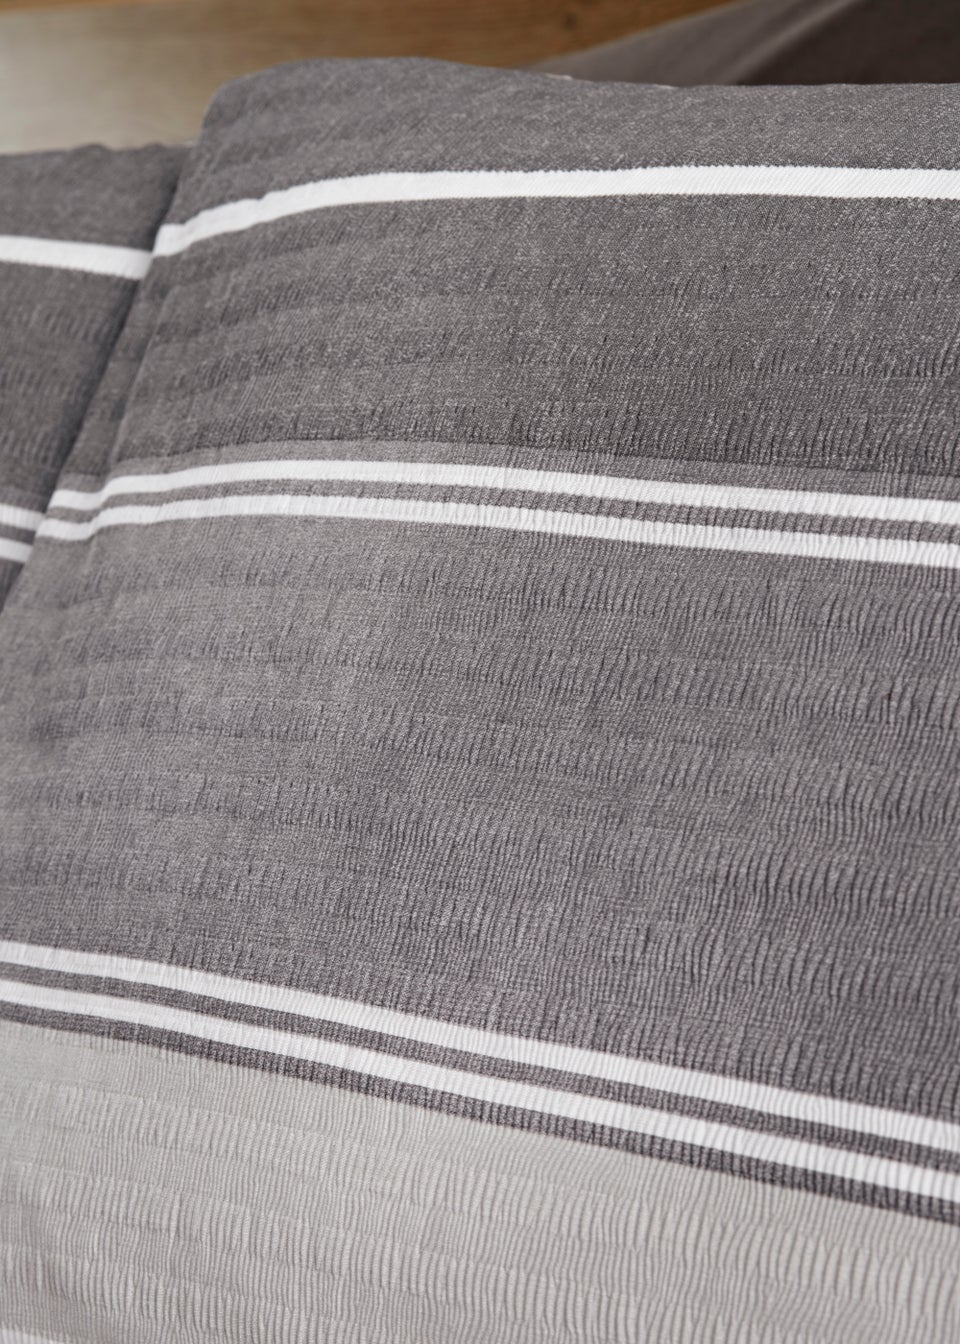 Grey Seersucker Stripe Reversible Duvet Cover